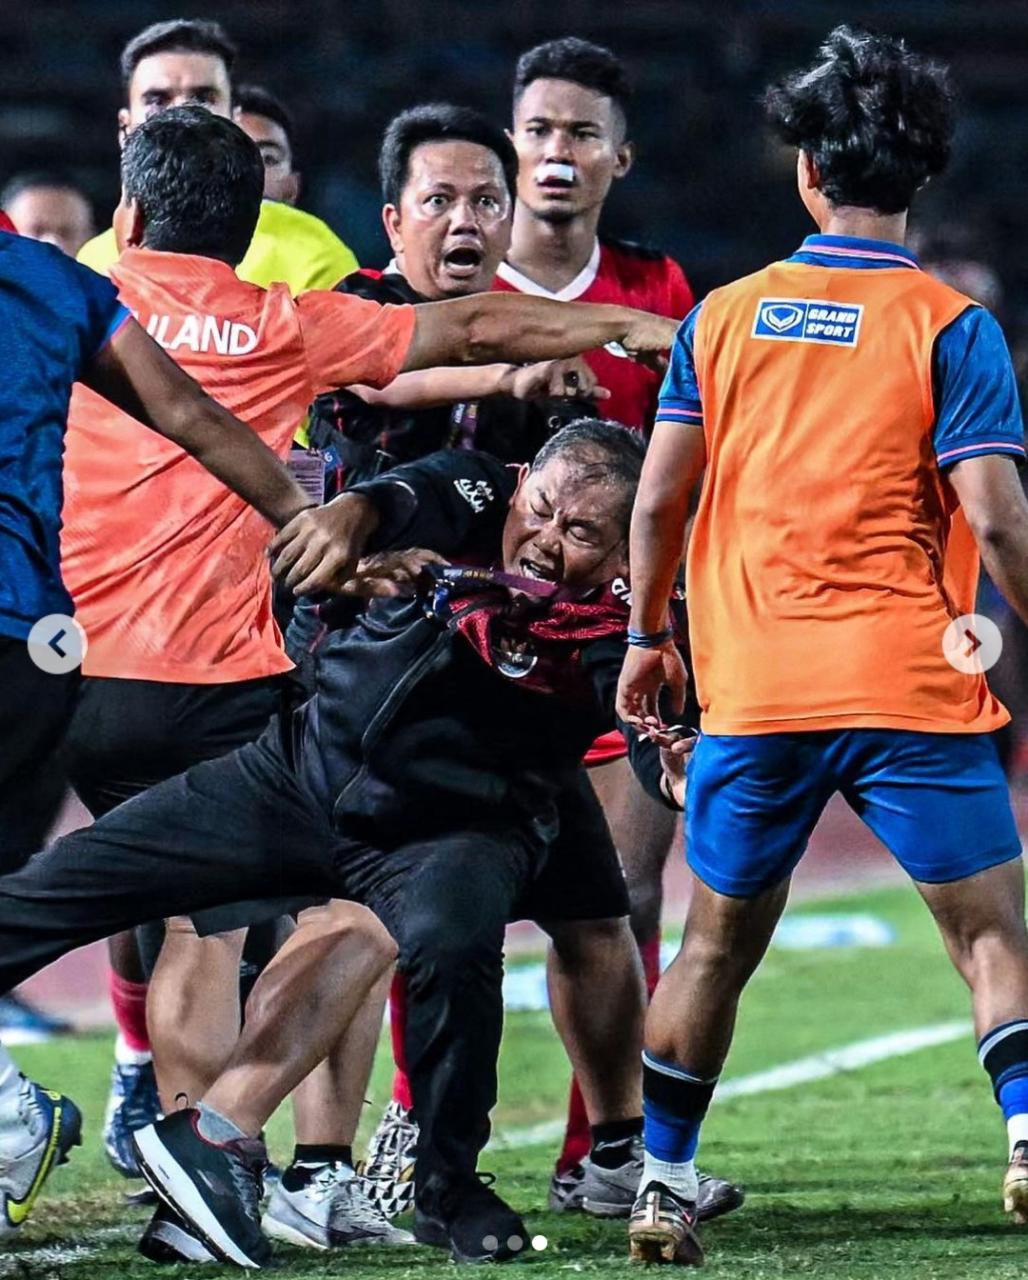 Indonesia bakal laporkan insiden sepak bola SEA Games ke FIFA